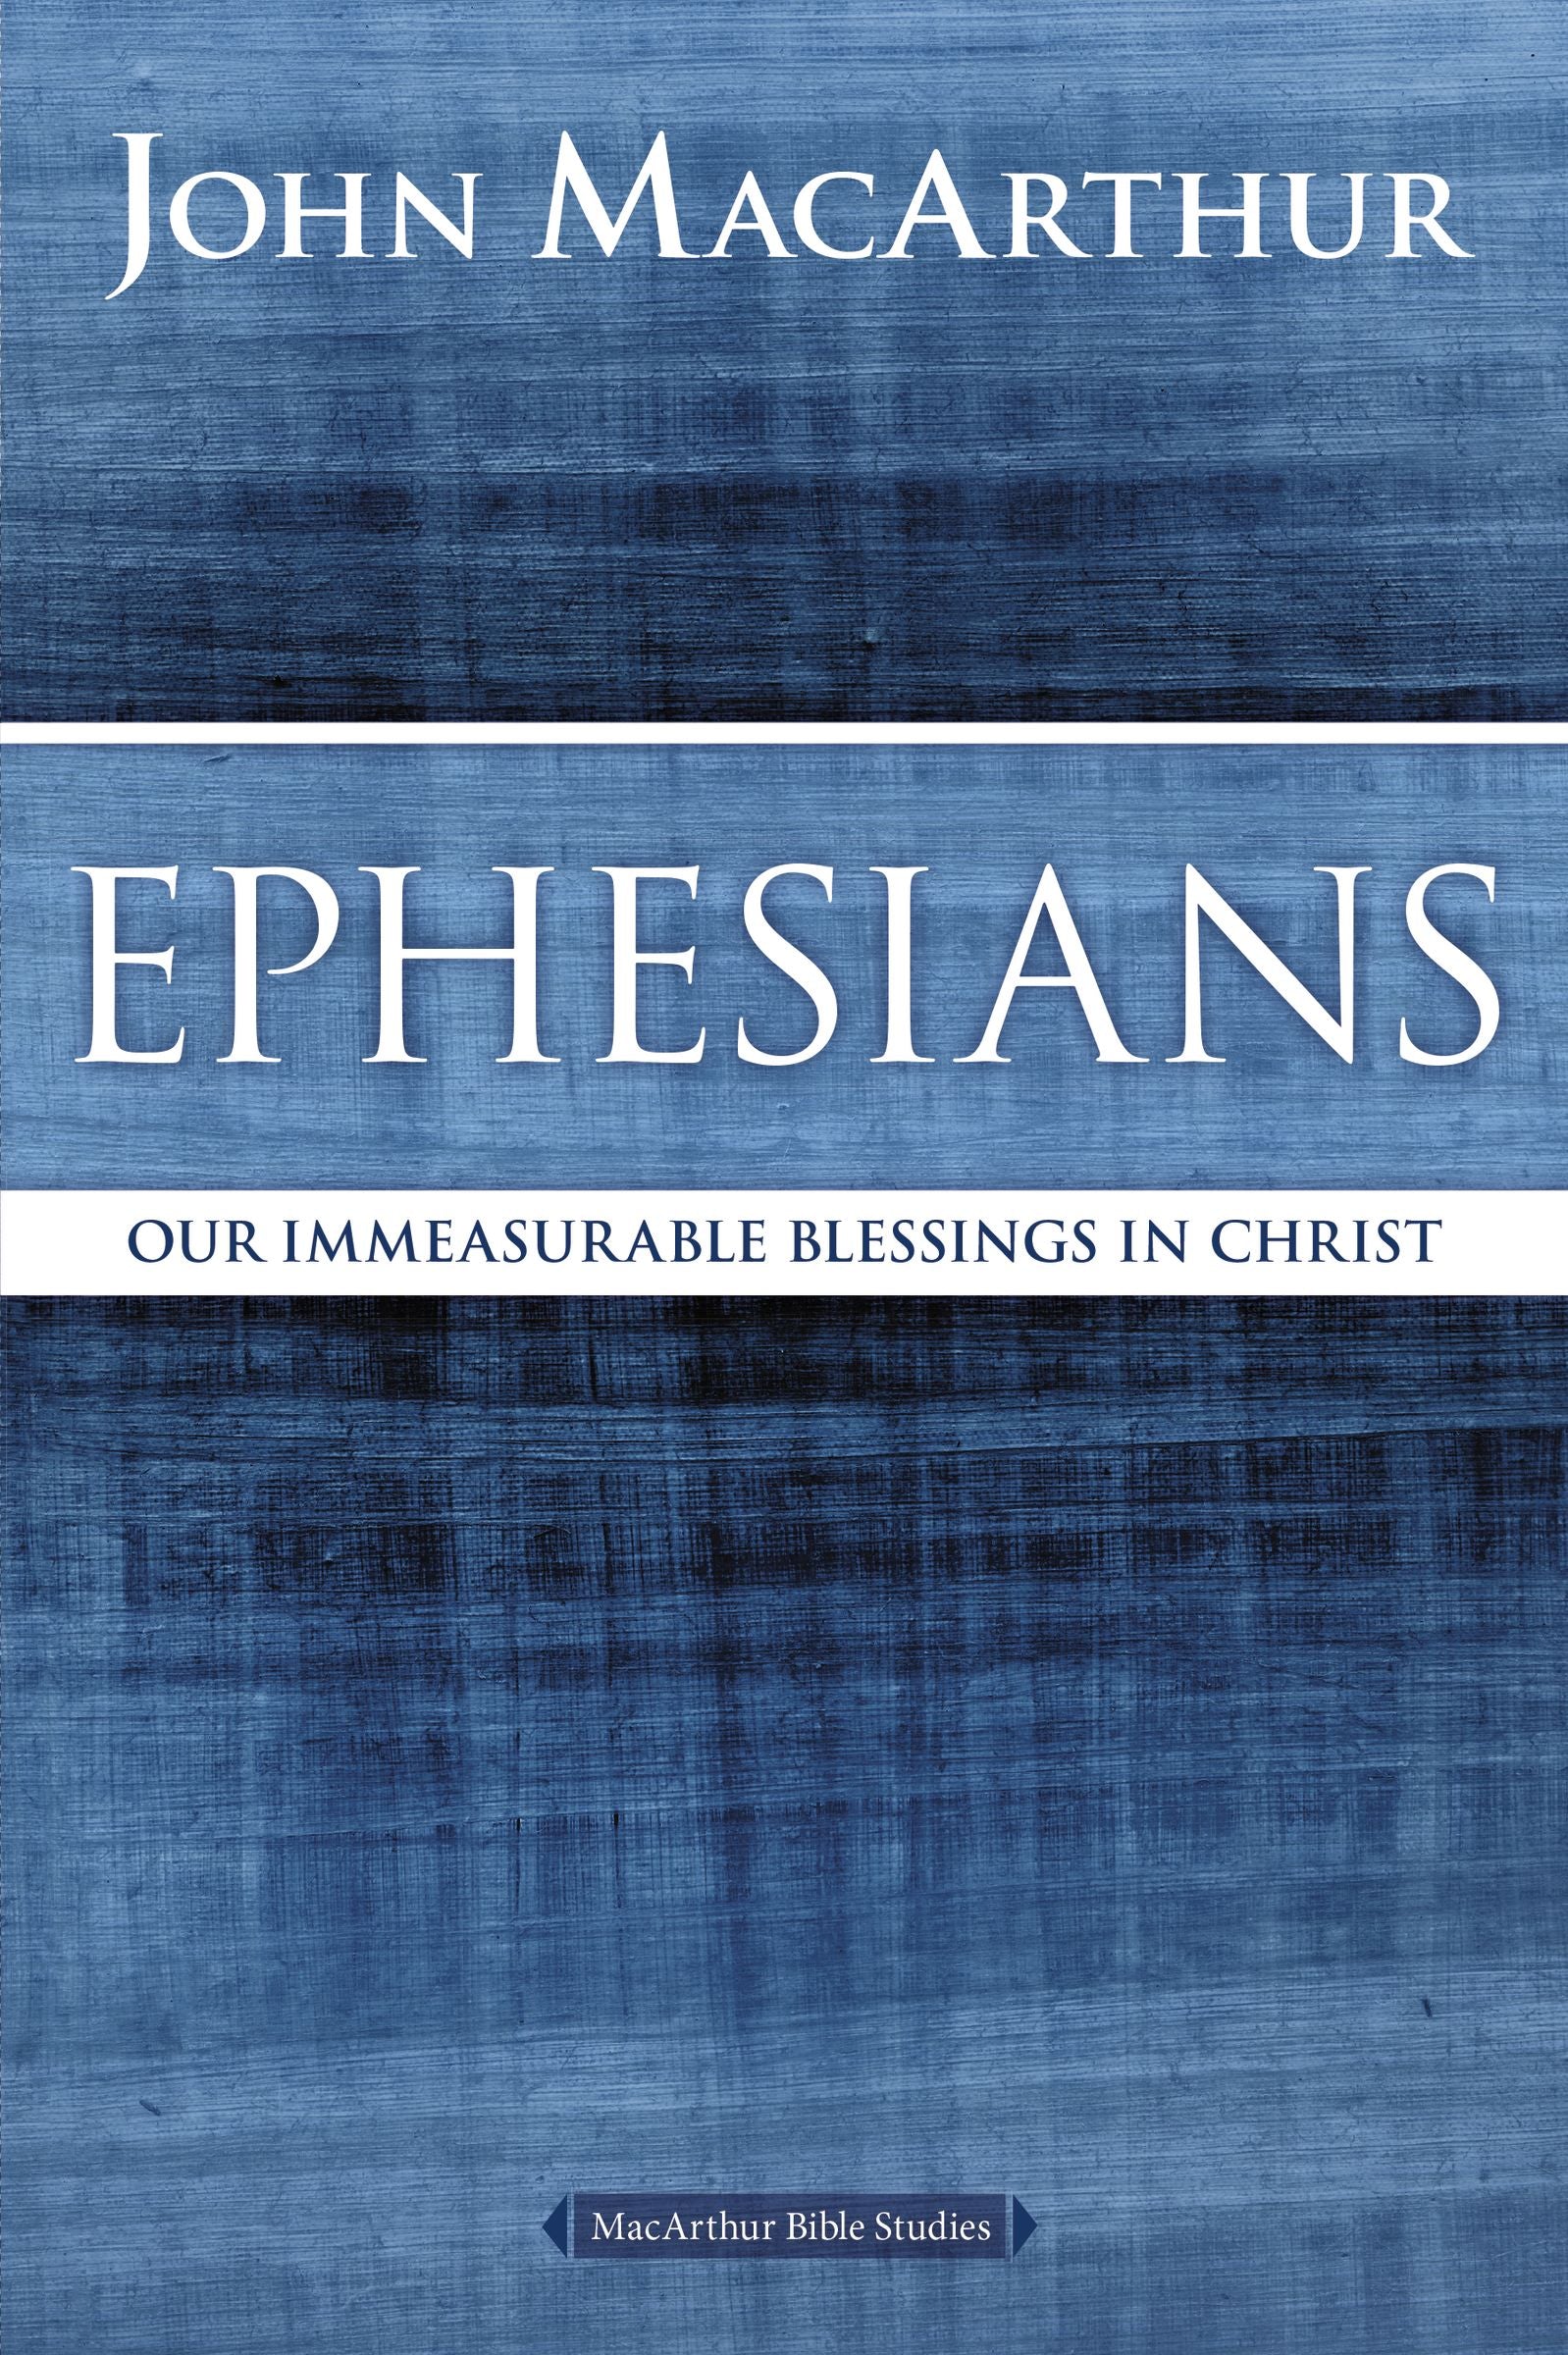 Image of Ephesians other